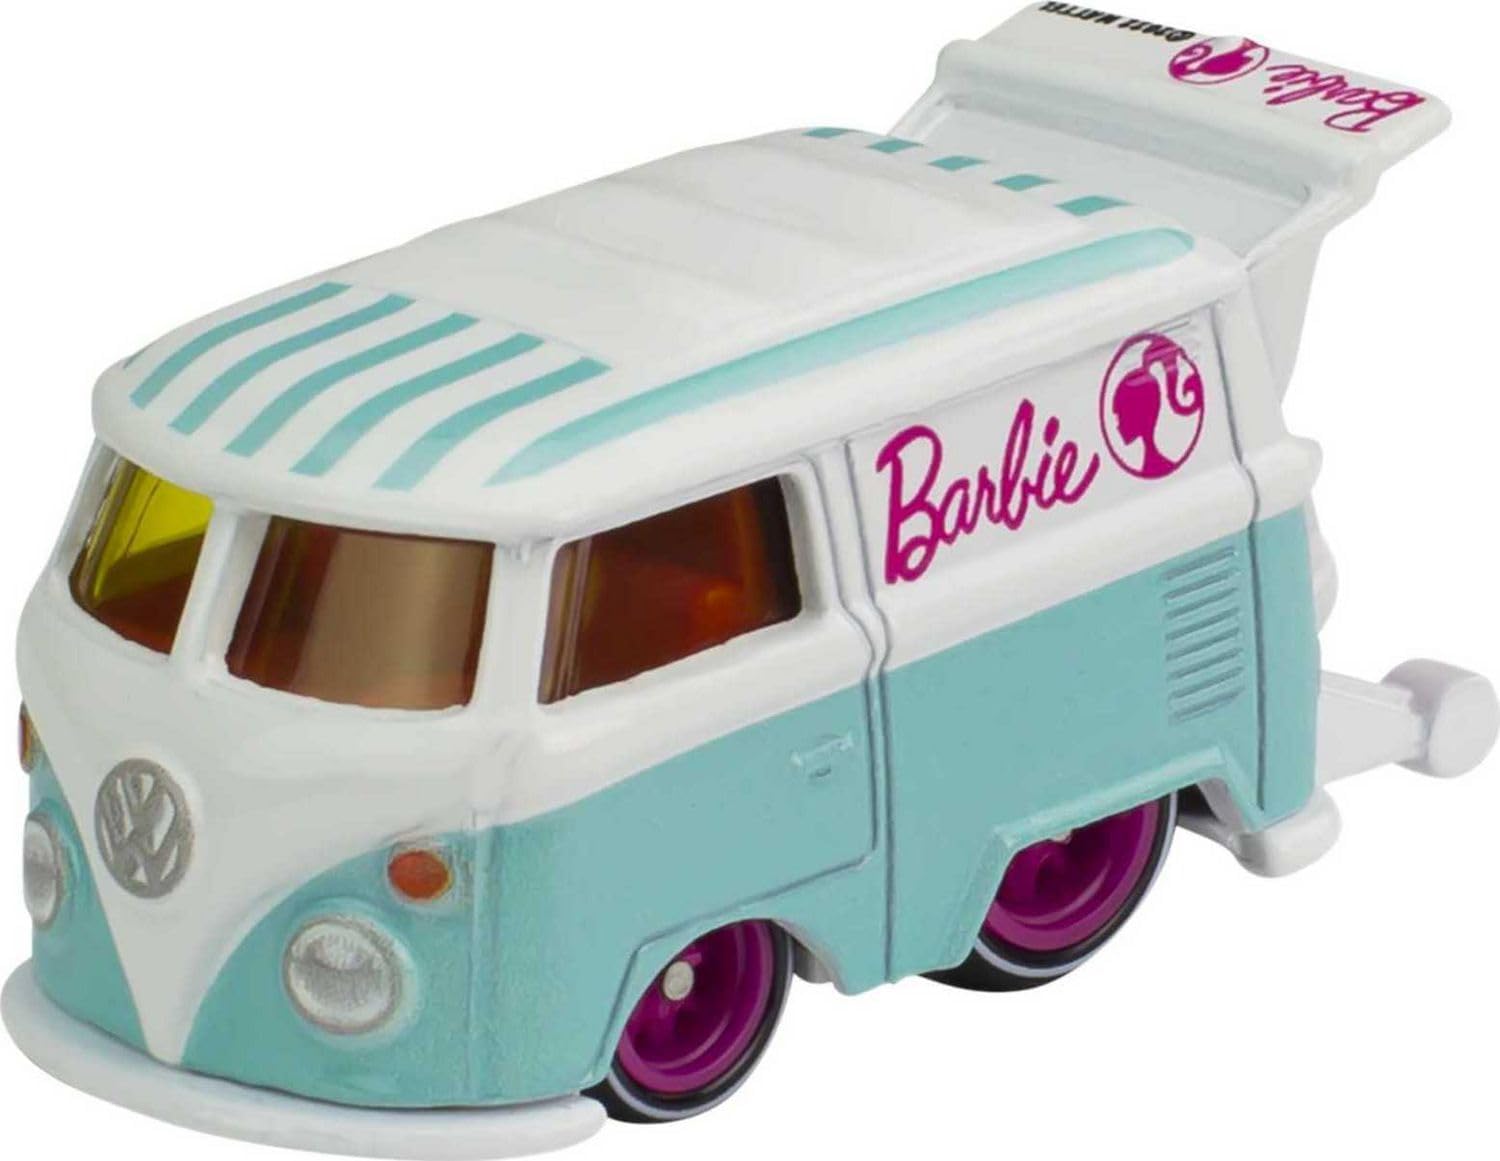 Hot Wheels Premium Kool Kombi Barbie - Chido Toys